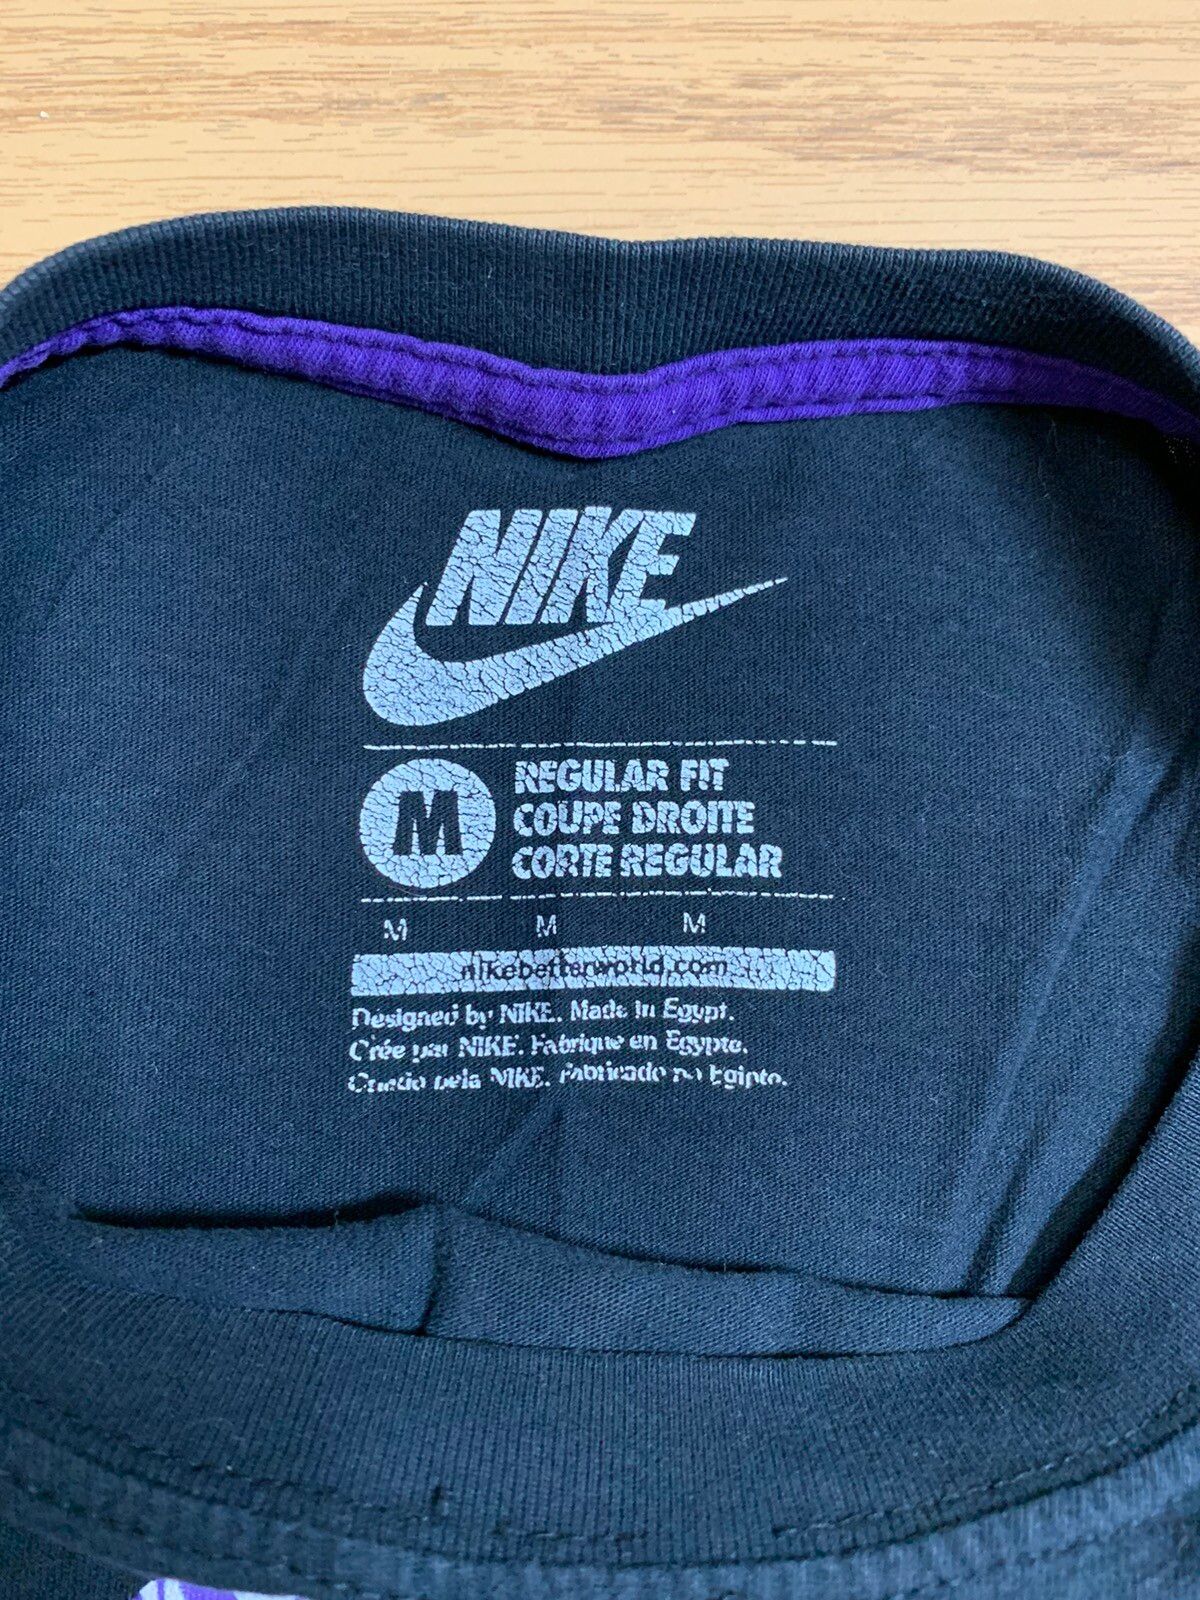 Nike Nike Kobe Ace of Spade Black/Purple Tee Regular Fit Shirt Size US M / EU 48-50 / 2 - 3 Preview